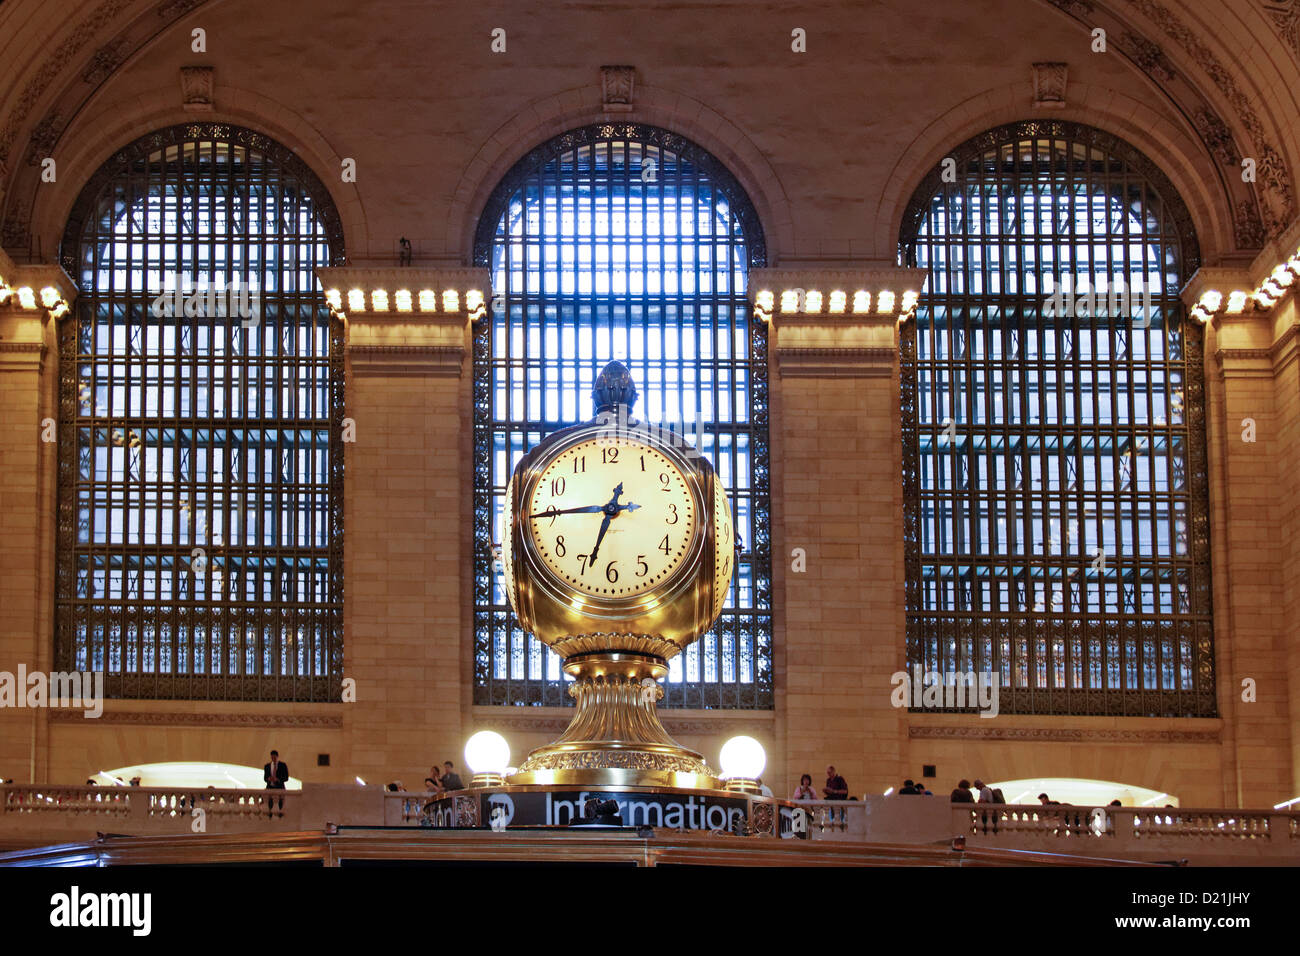 Uhr an der Grand Central Station, Manhattan, New York City, New York, USA  Stockfotografie - Alamy